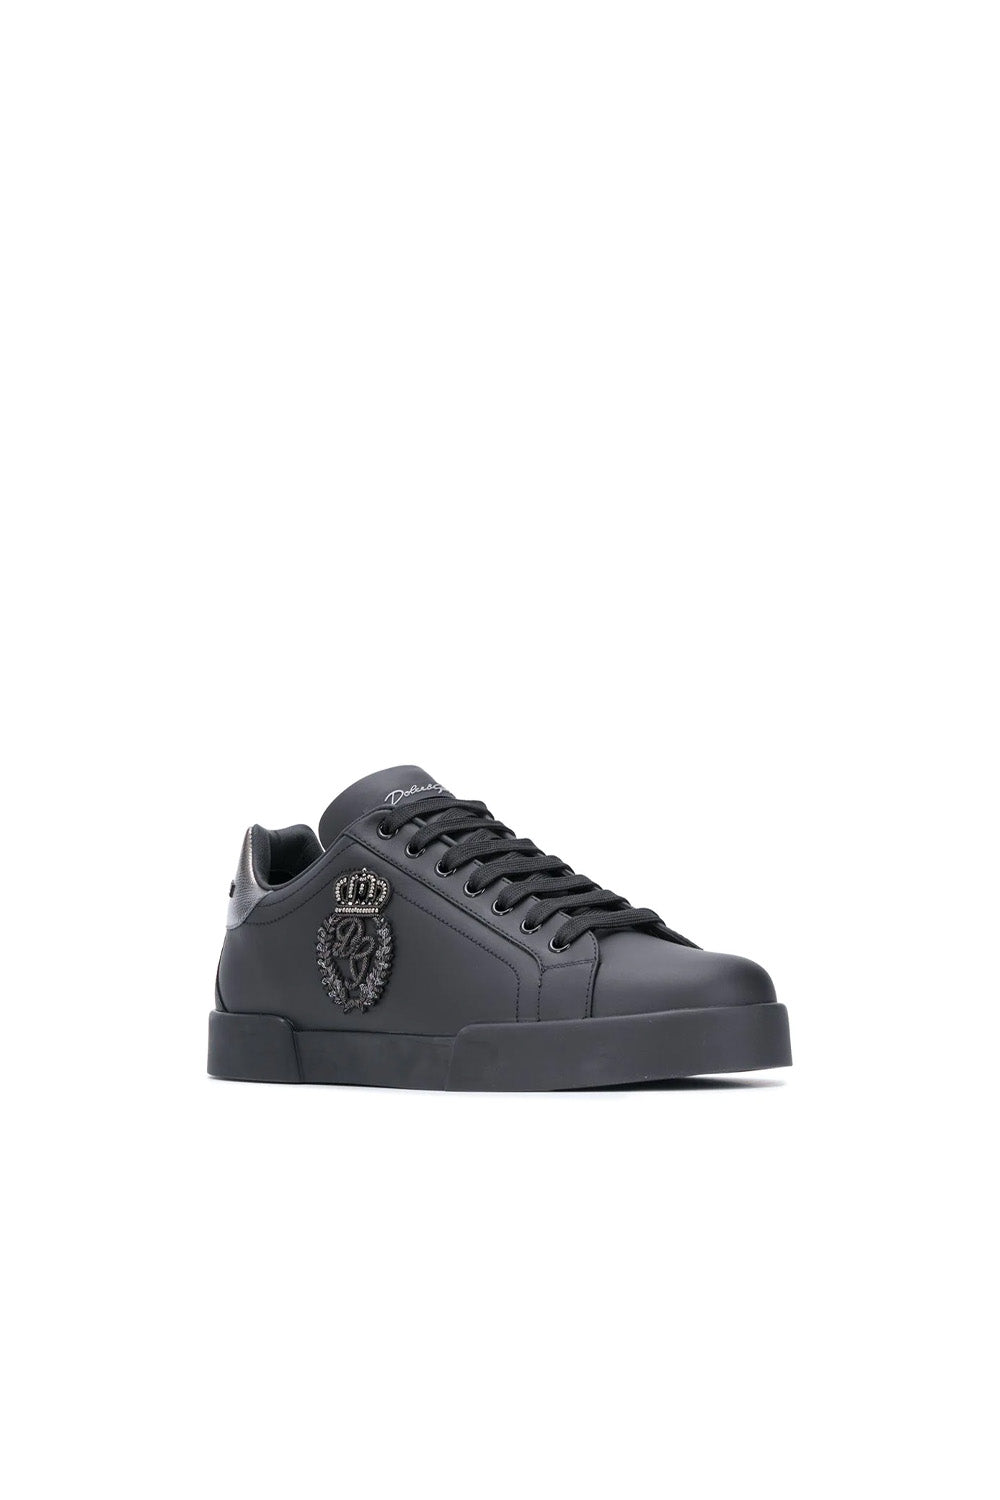 Dolce & Gabbana Portofino crow patch sneakers